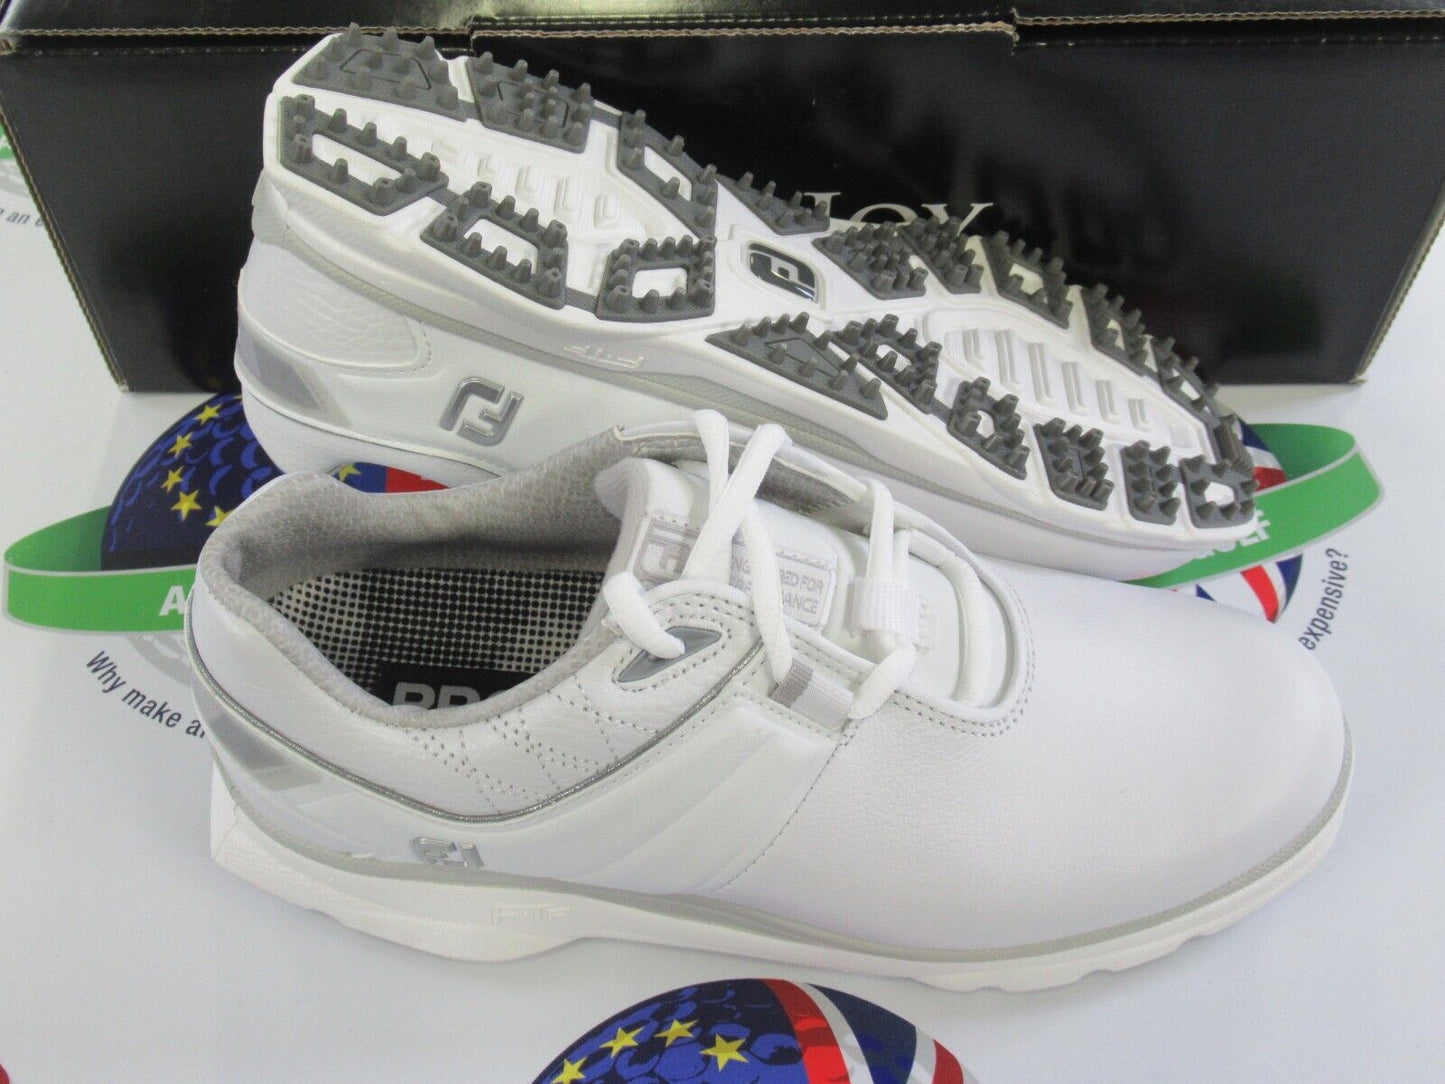 footjoy pro sl womens golf shoes white/silver uk size 4 wide/large